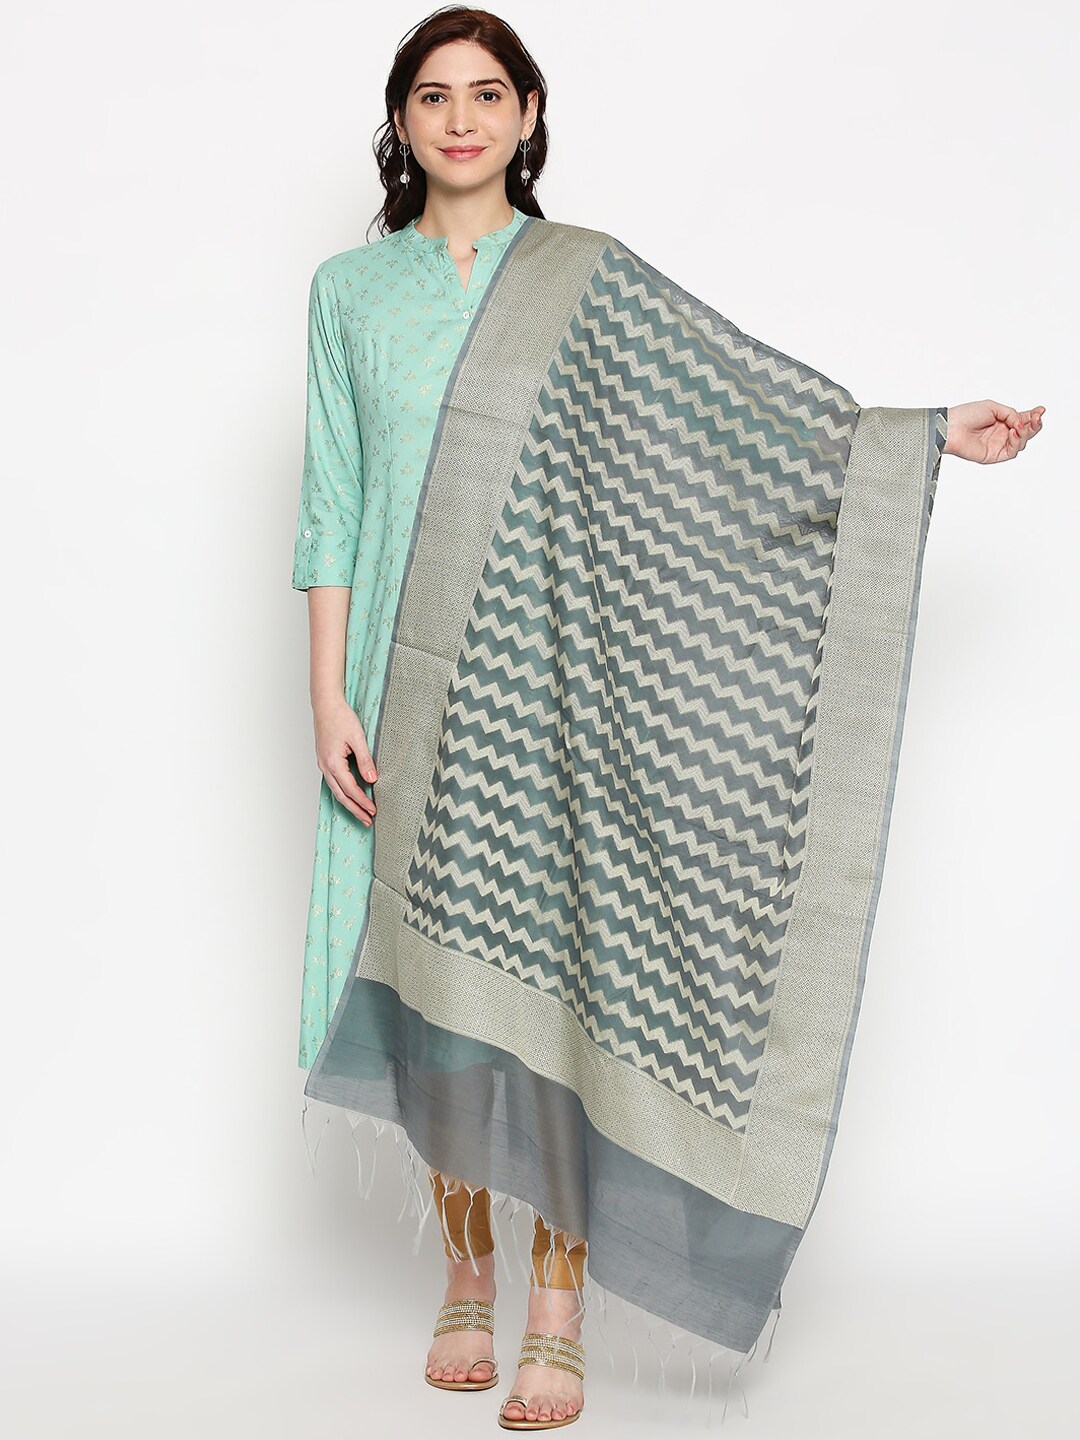 RANGMANCH BY PANTALOONS Women Grey & Gold-Colour Woven-Design Dupatta Price in India